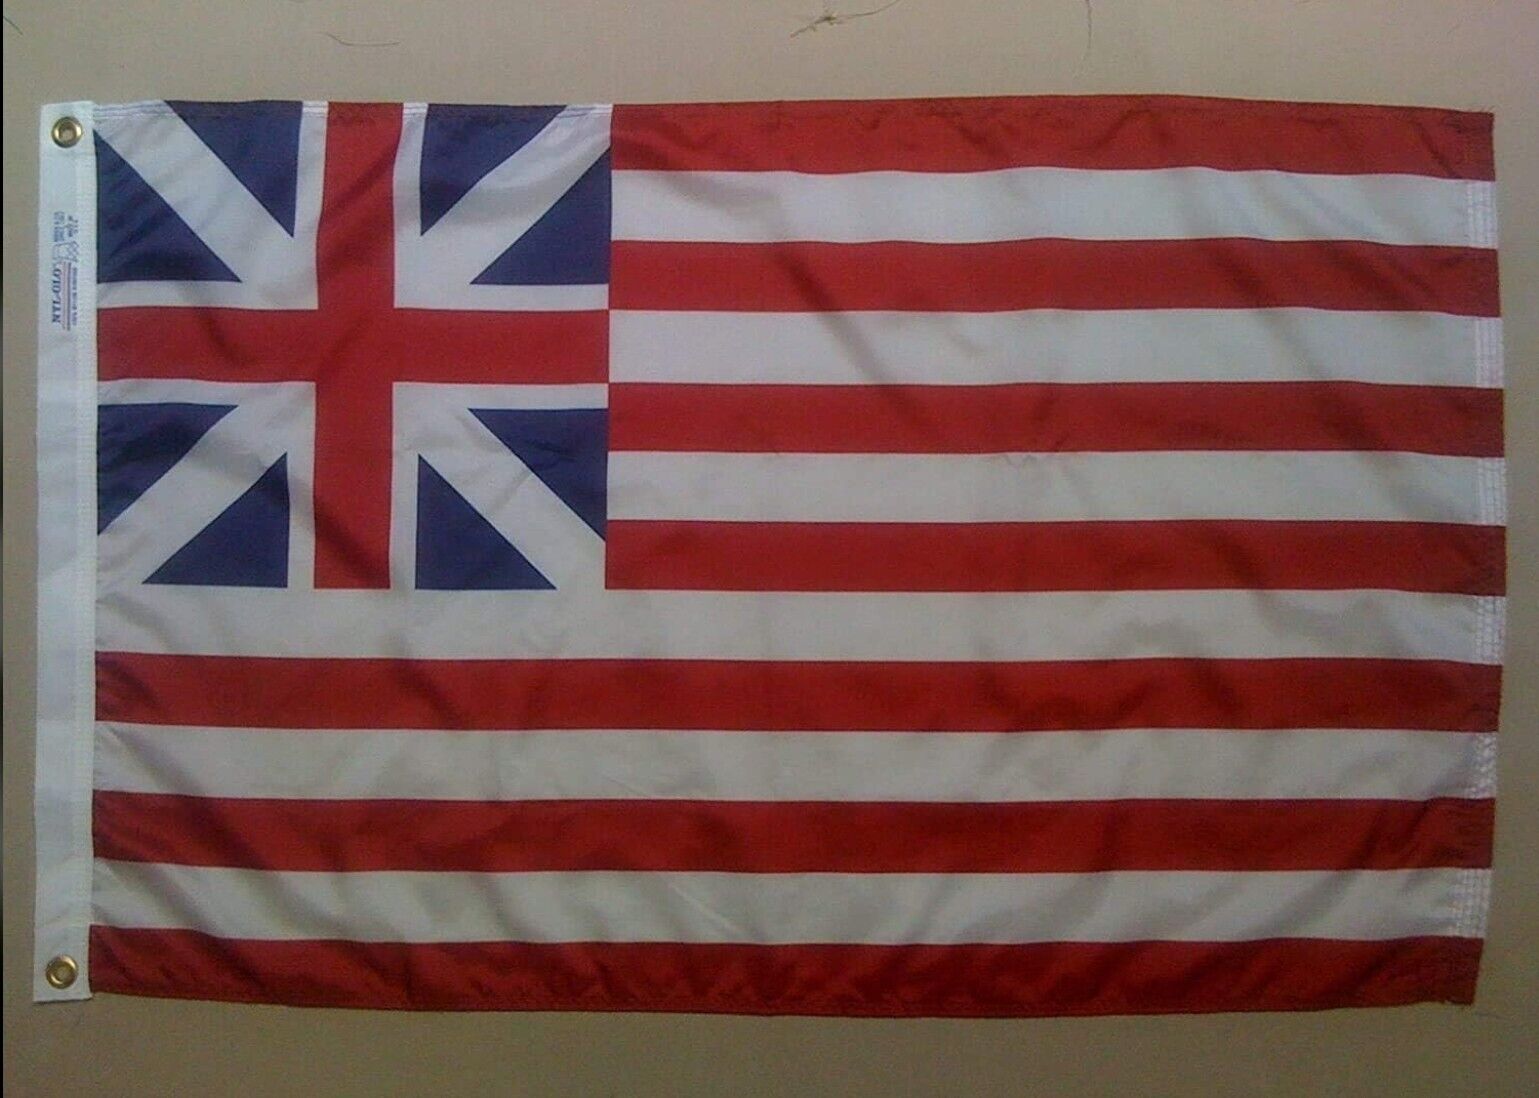 GRAND UNION Flag 317595 3x5 Annin Nyl-Glo